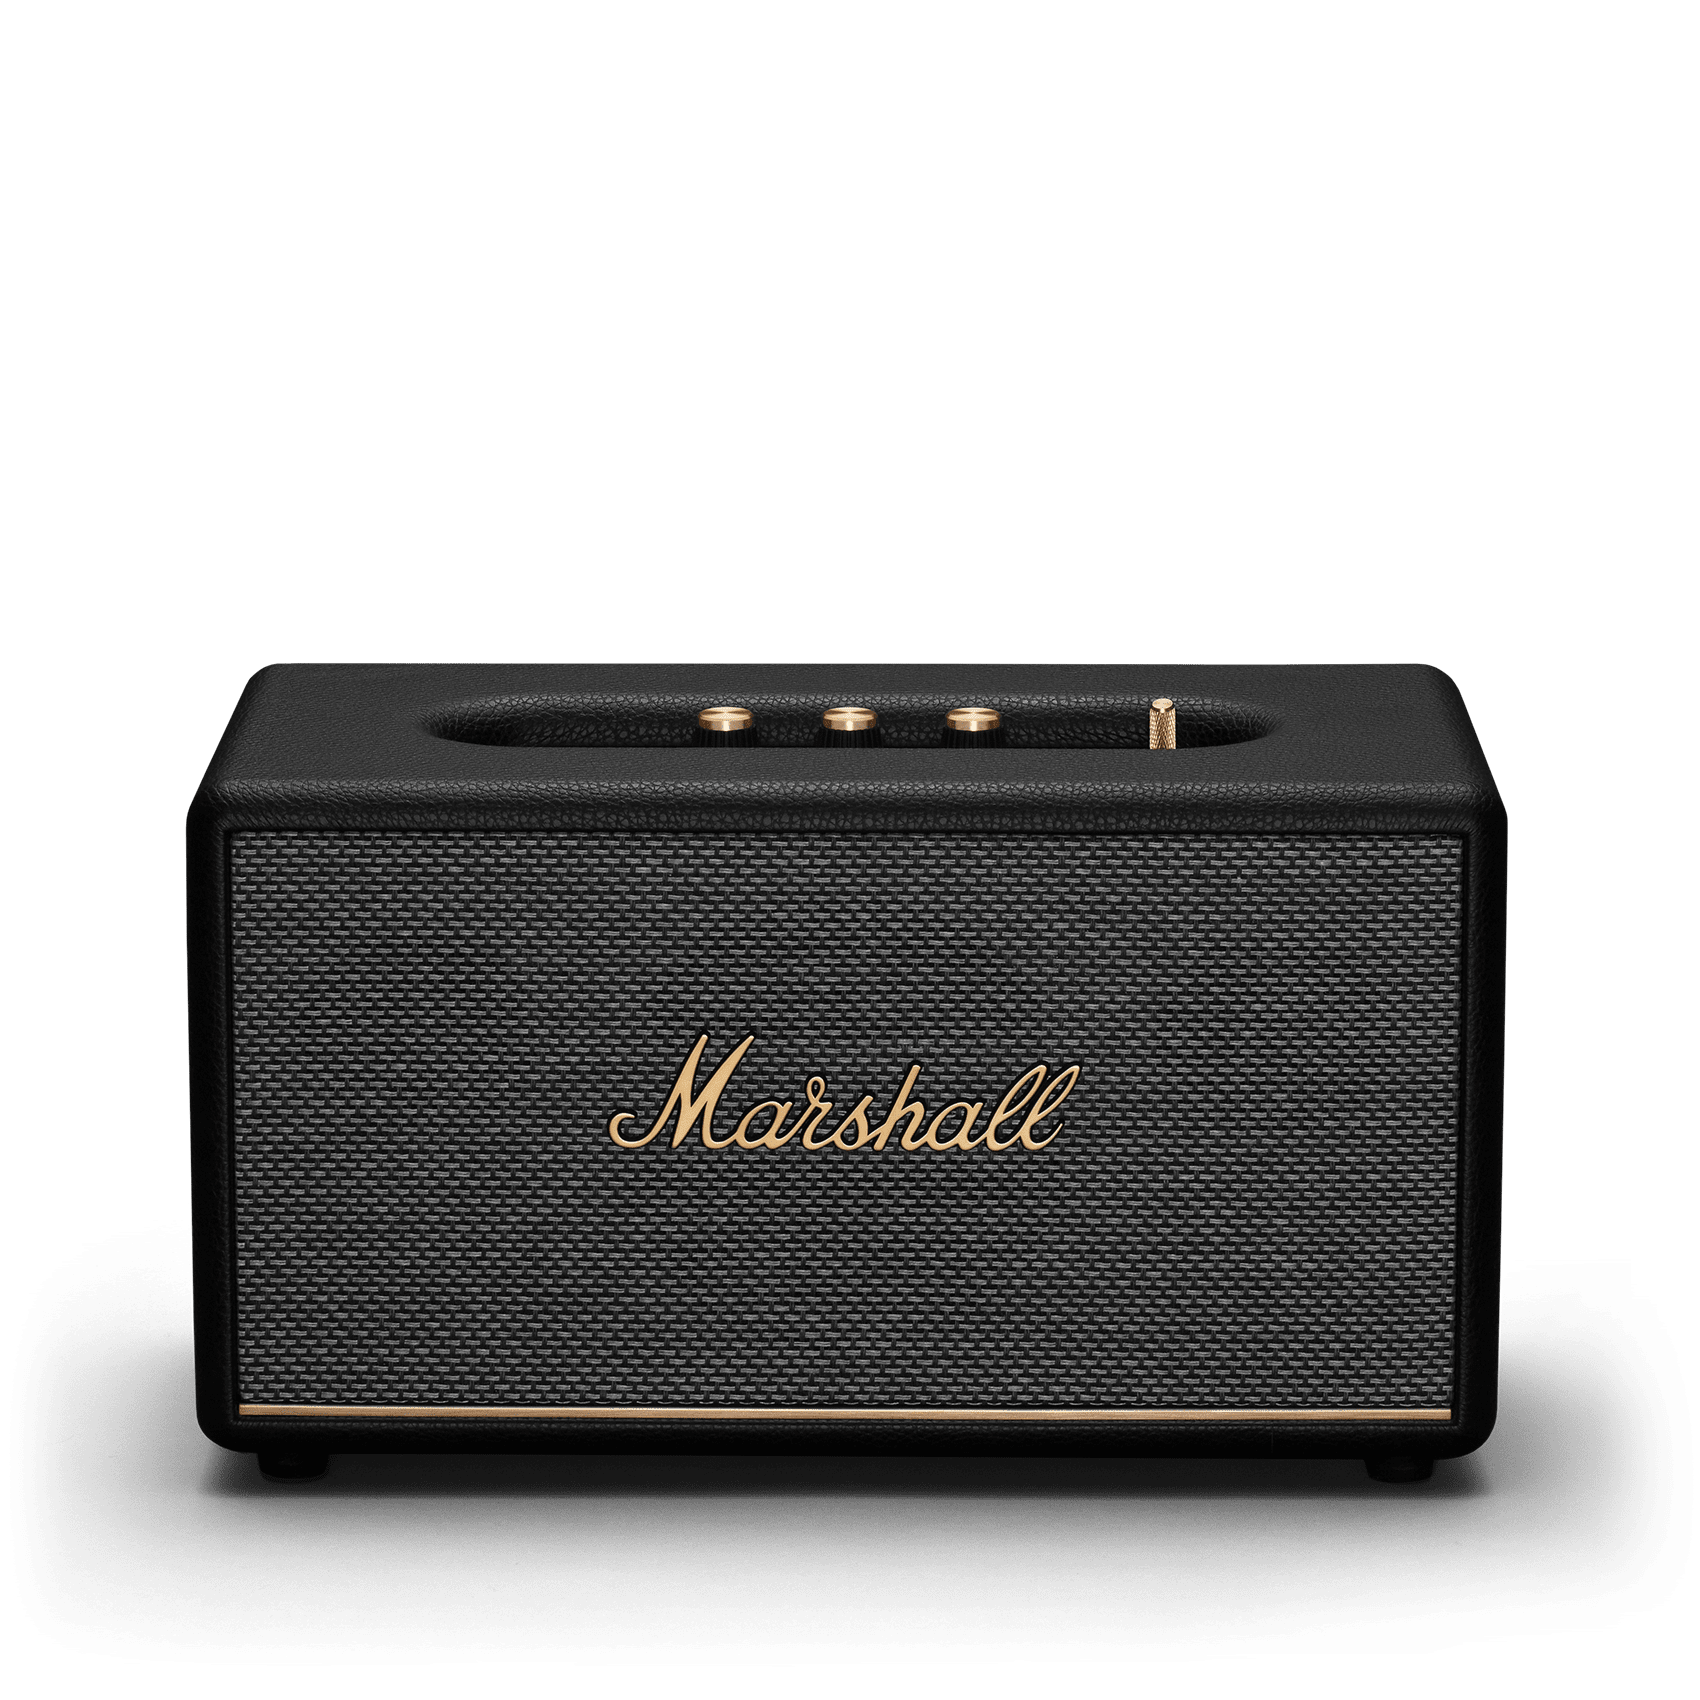 Maak leven Kosten Uitstekend Buy Marshall Speakers and Home Audio systems | Marshall